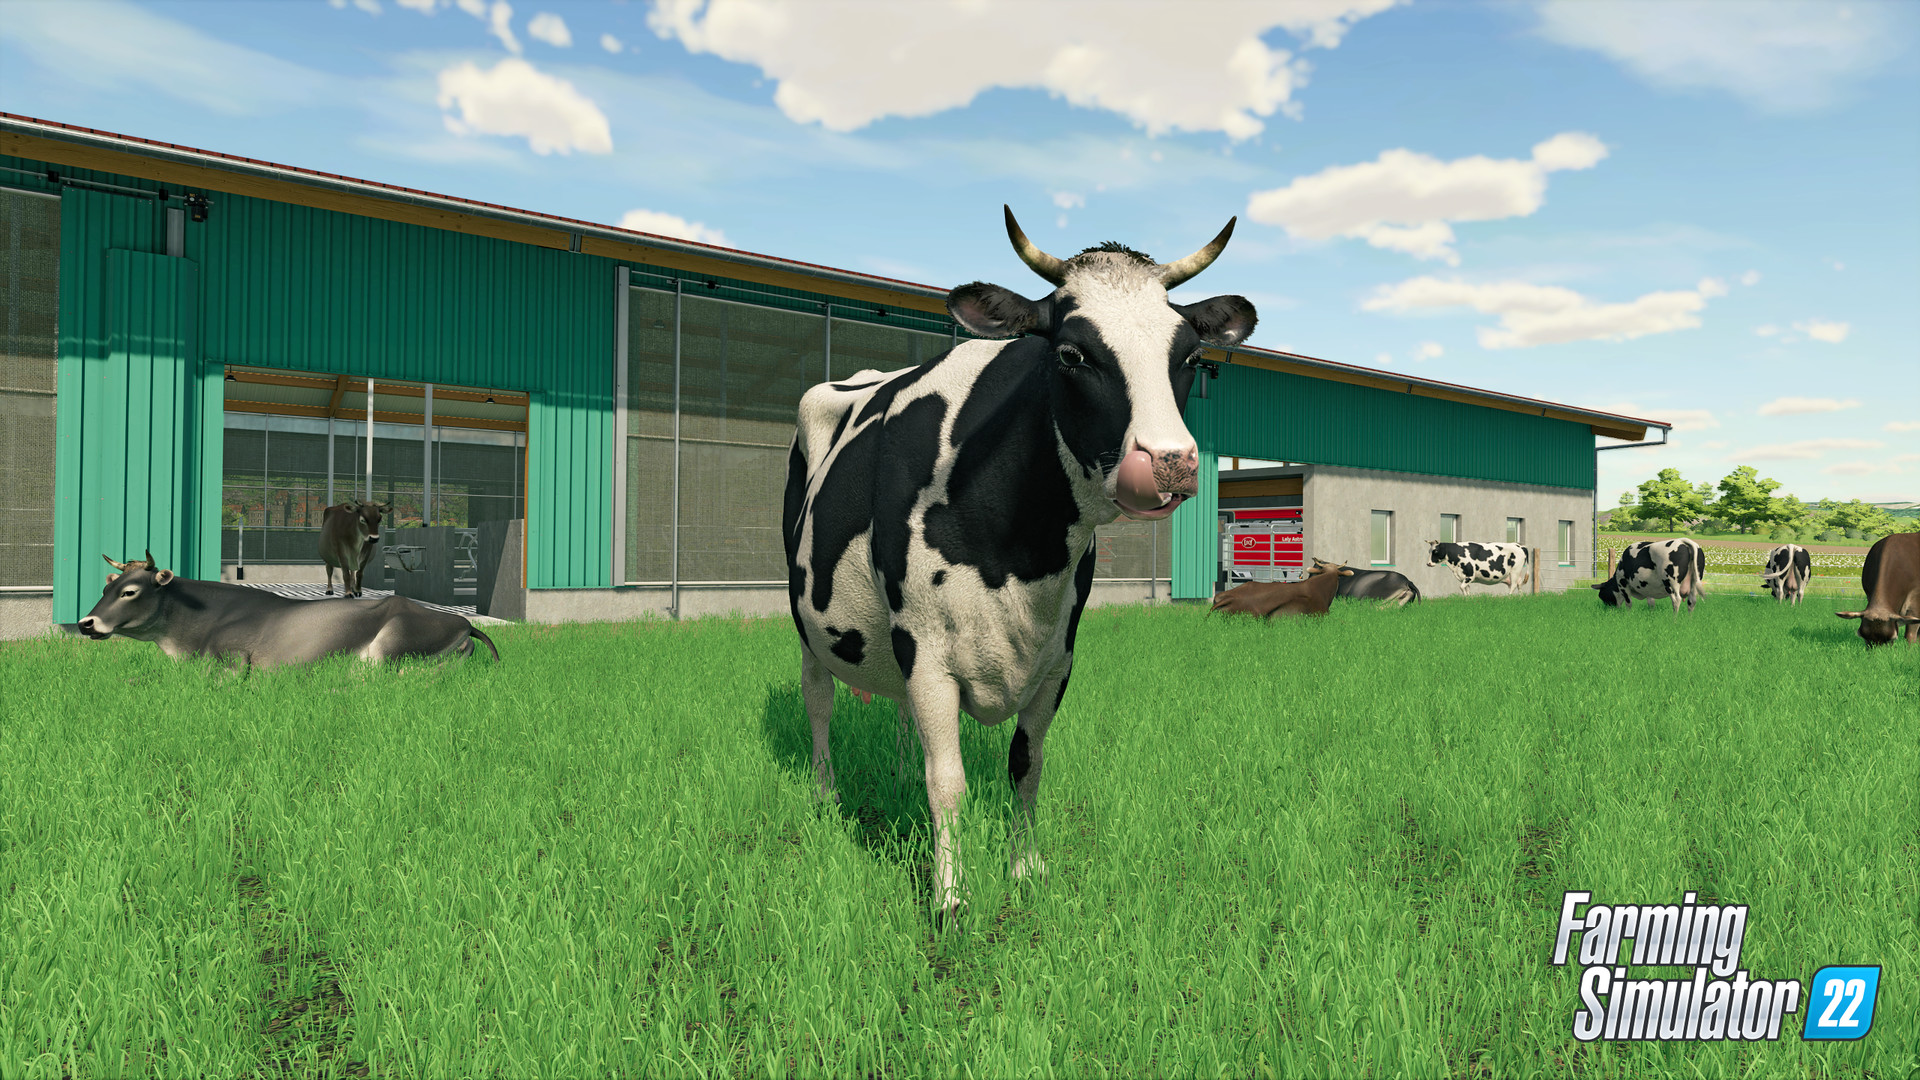 Farming Simulator 22 PlayStation 4 Account Pixelpuffin.net Activation Link